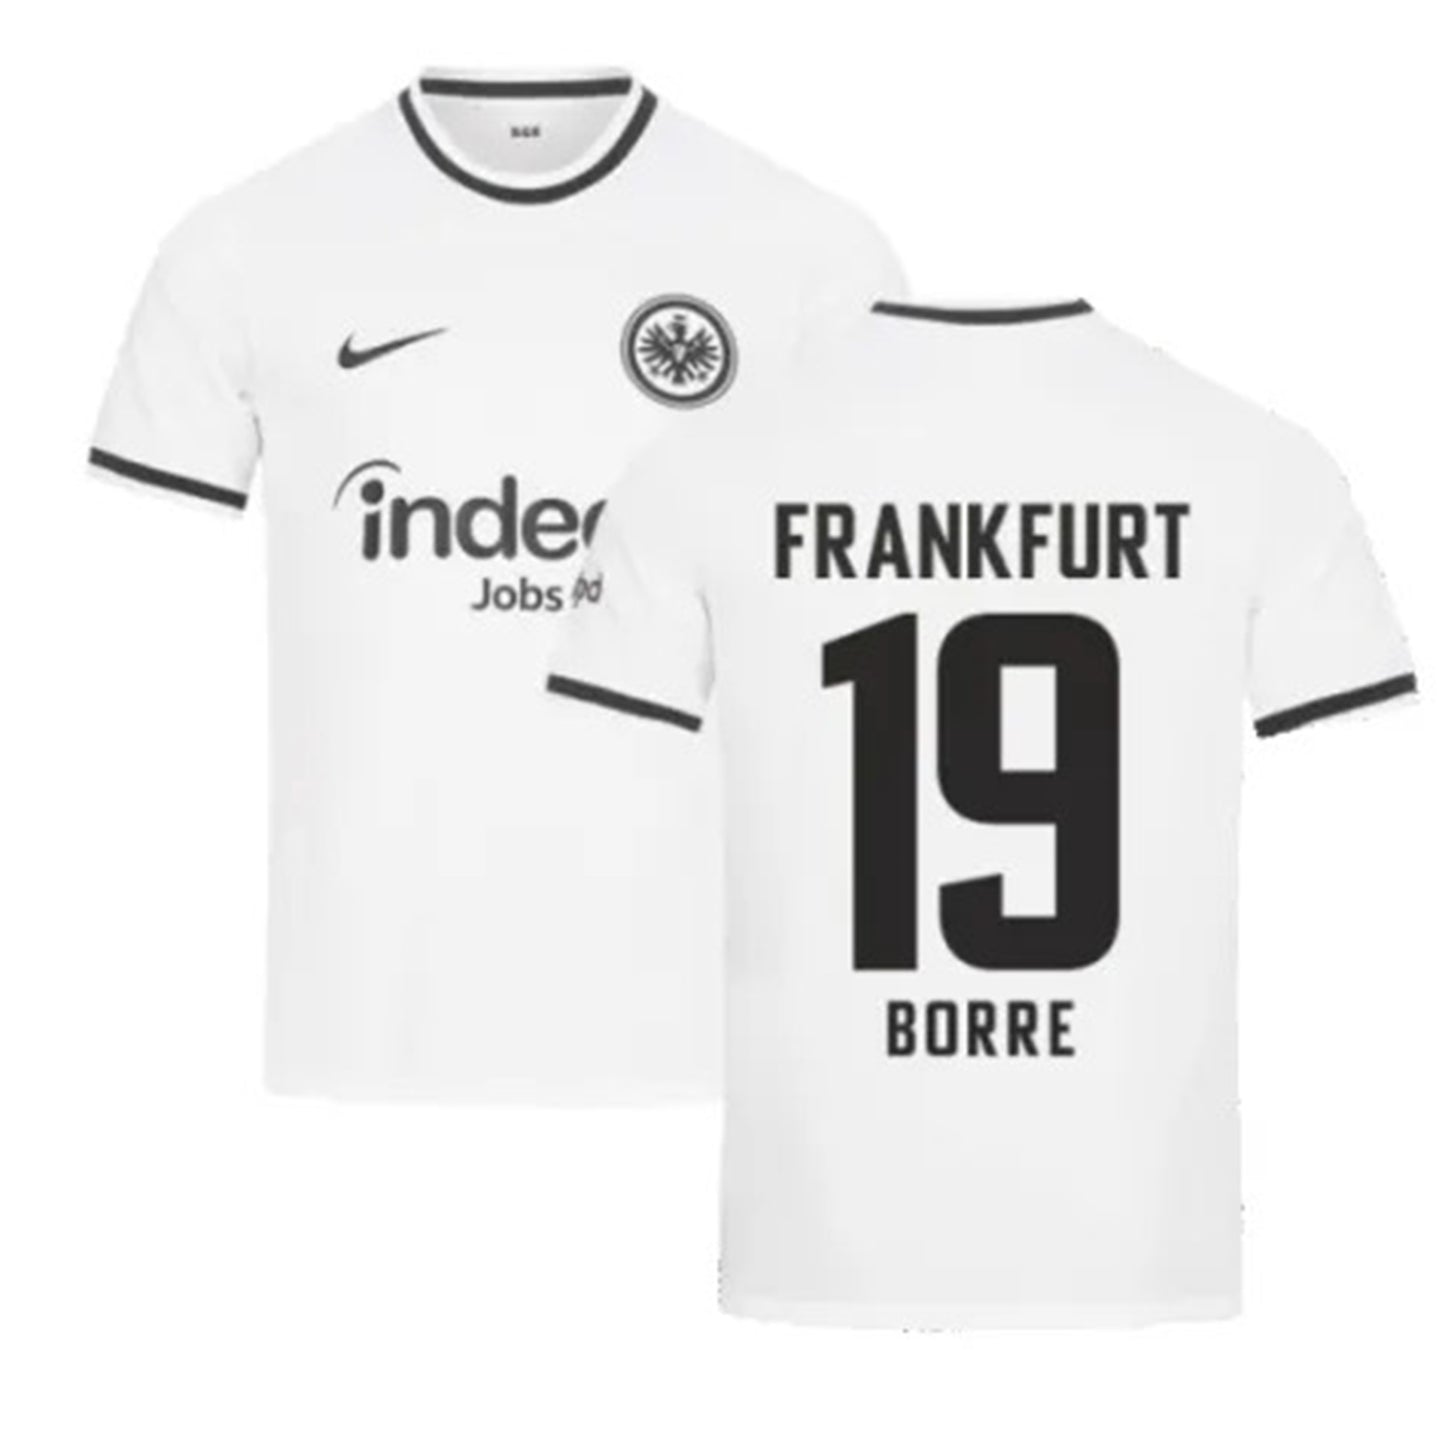 Rafael Santos Borré Eintracht Frankfurt 19 Jersey